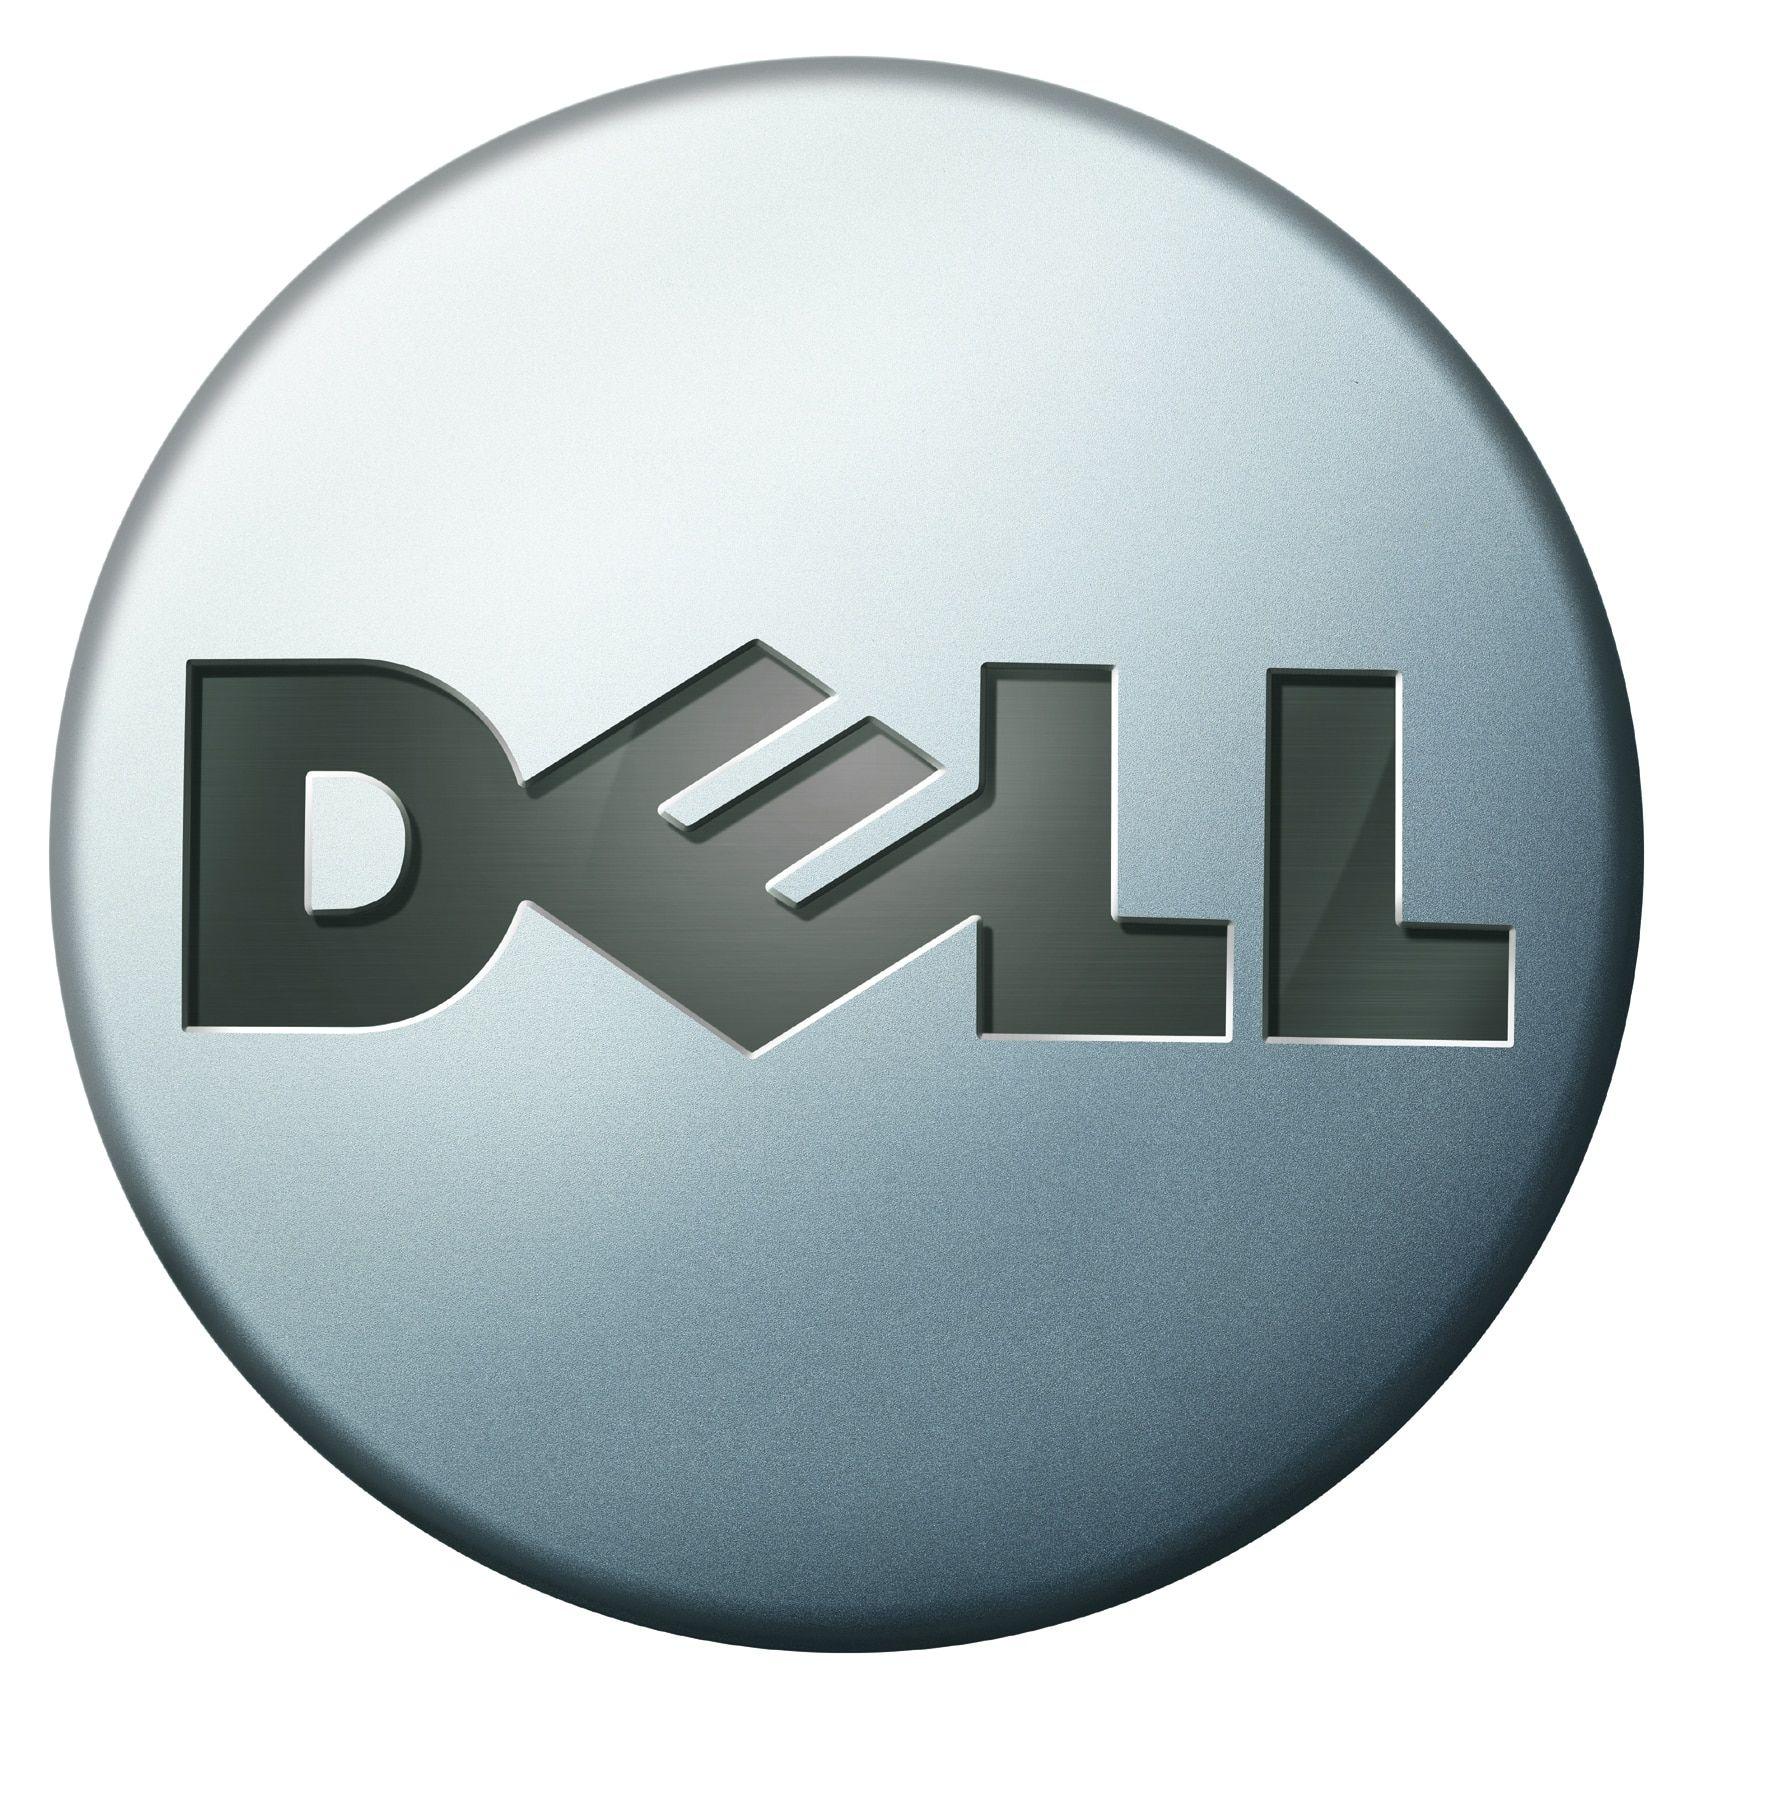 PowerEdge Logo - Trademark Information | Dell